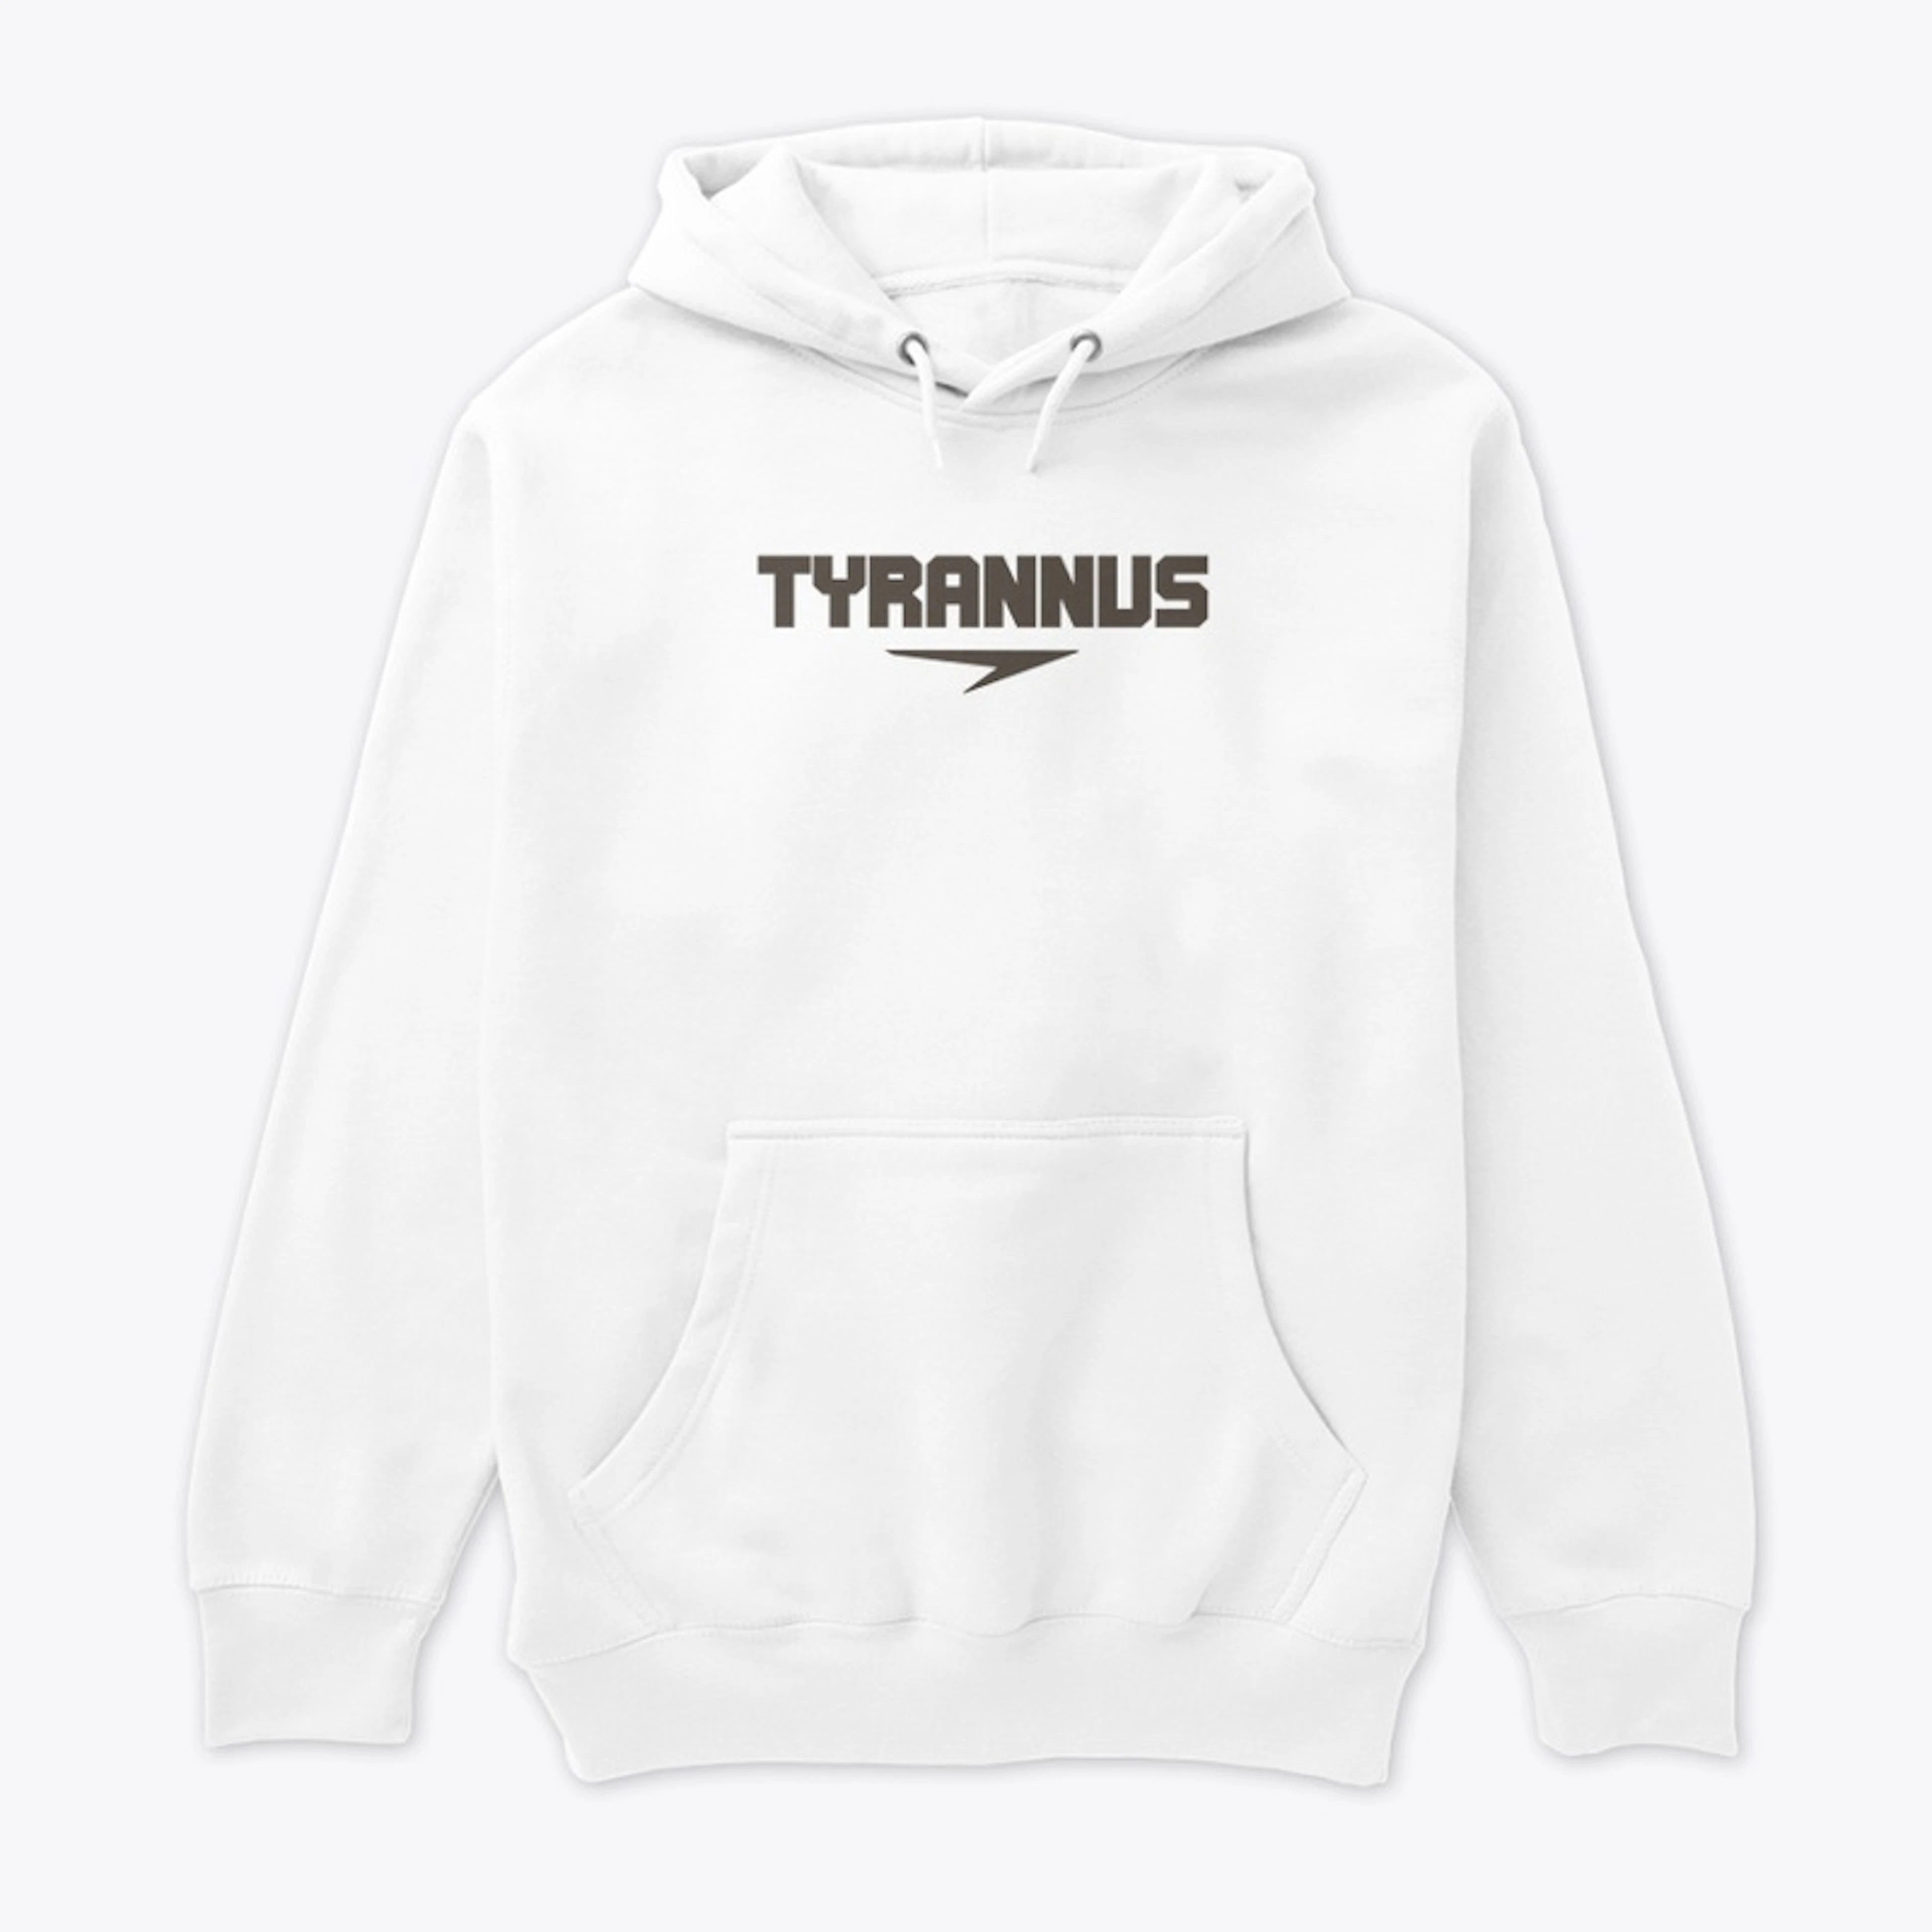 TYRANNUS